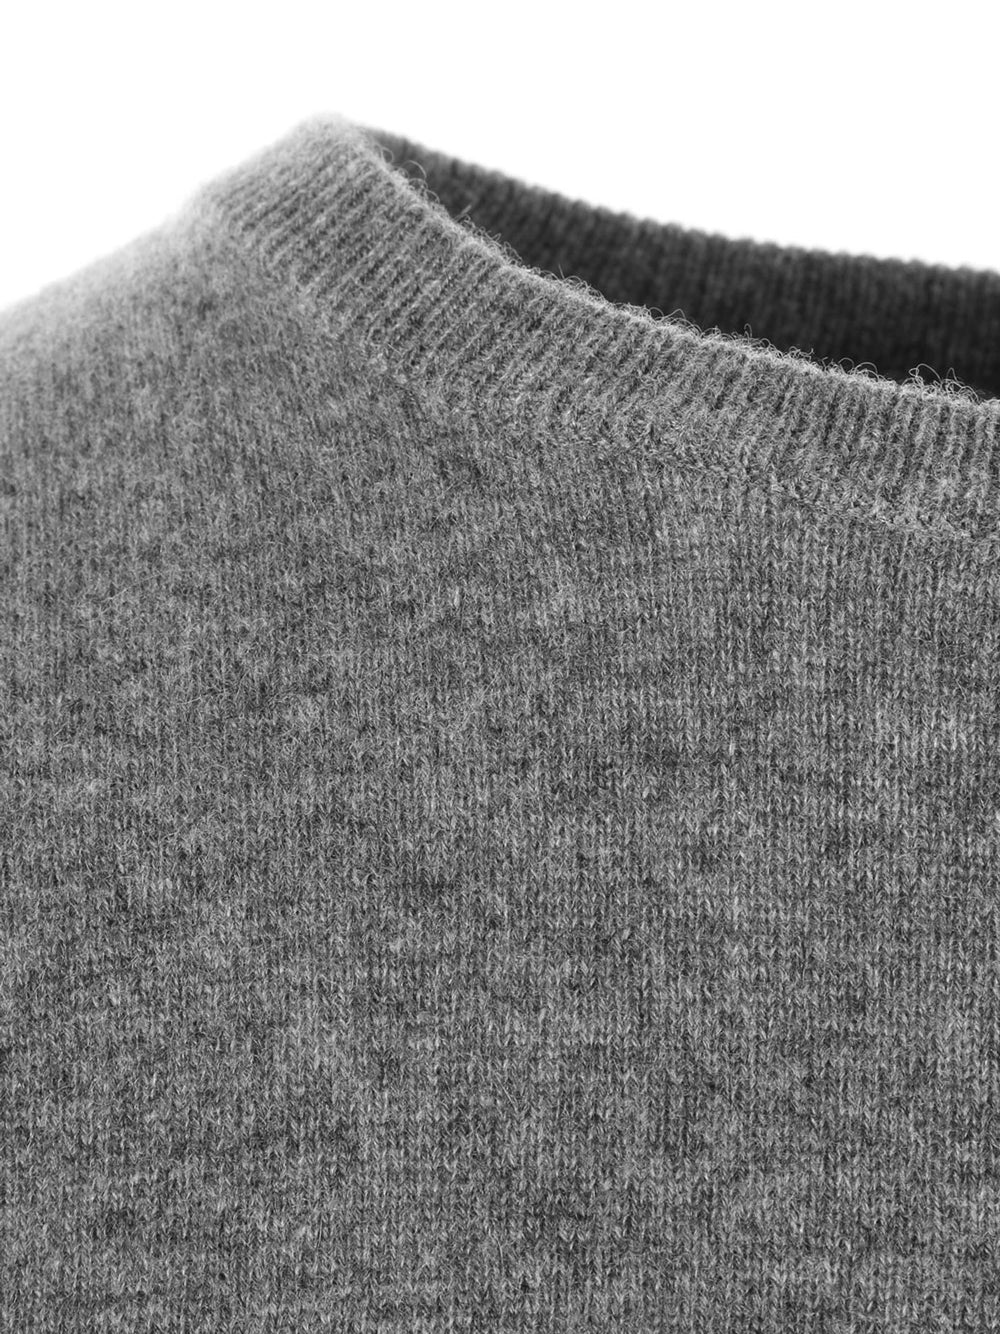 Cashmere sweater round neck for men Edit alt text